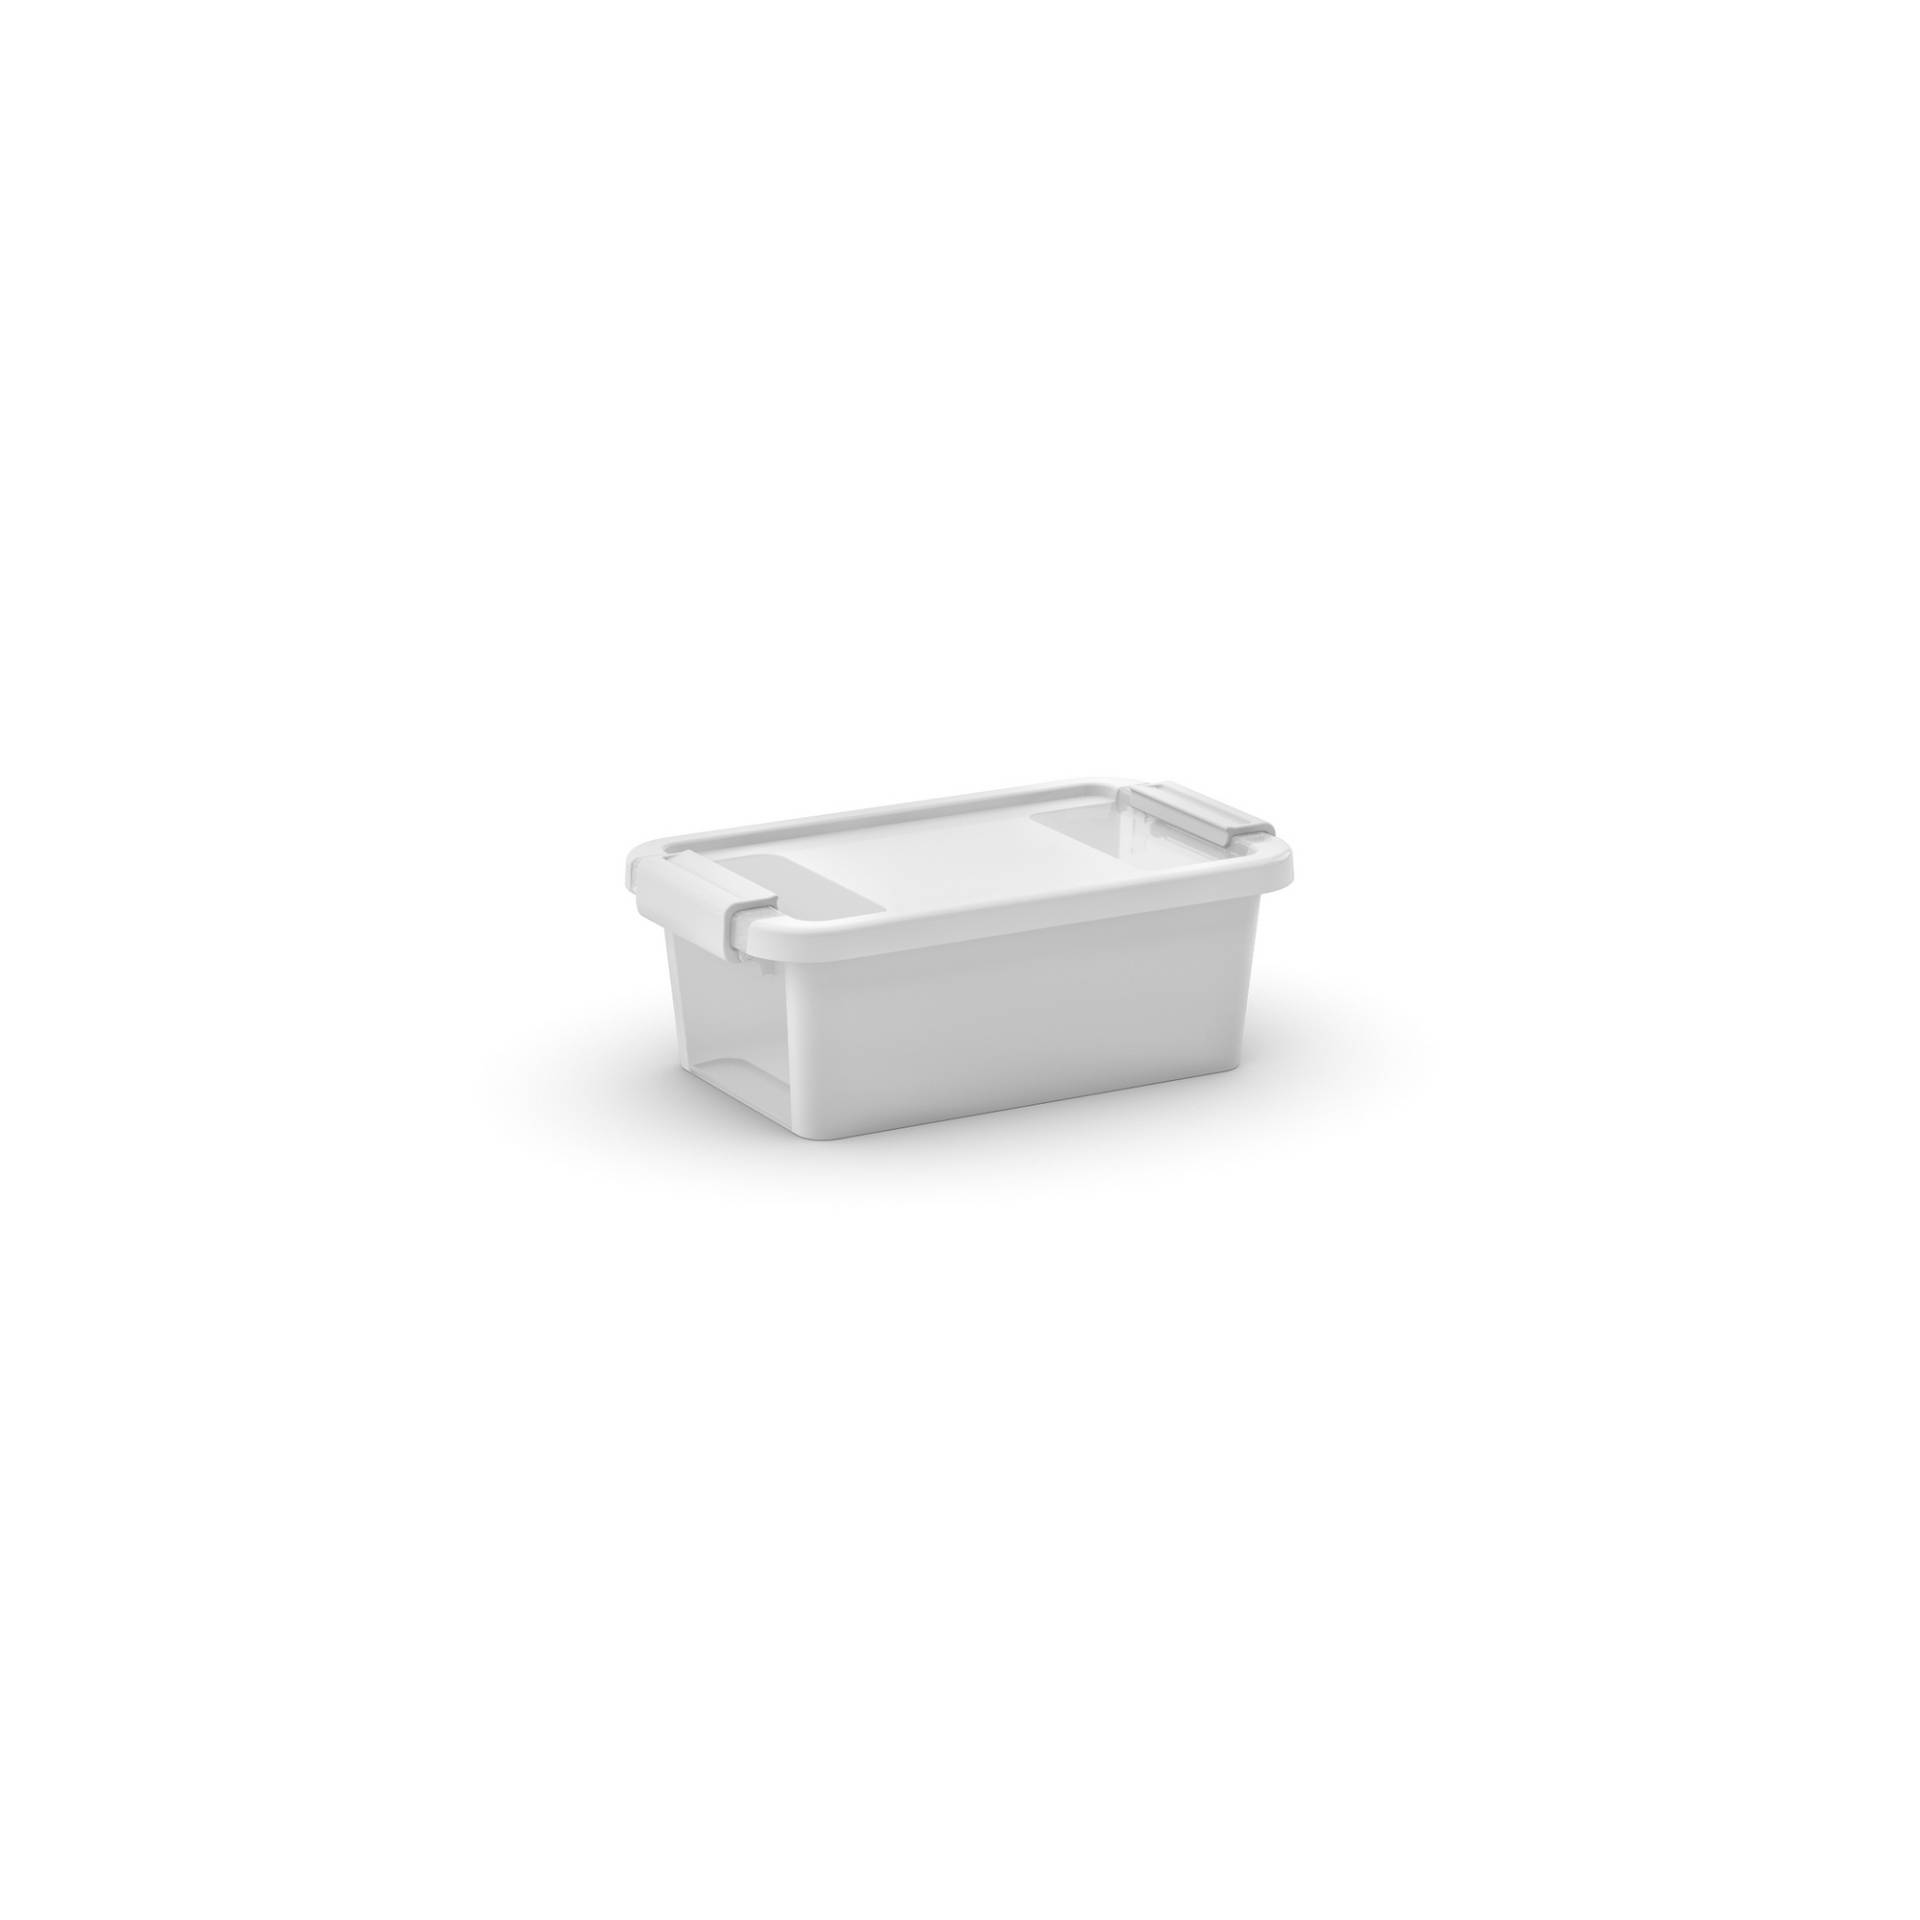 KIS Aufbewahrungsbox 'BI Box XS' weiß / transparent 3 l  26,5 x 16 x 10 cm von Kis